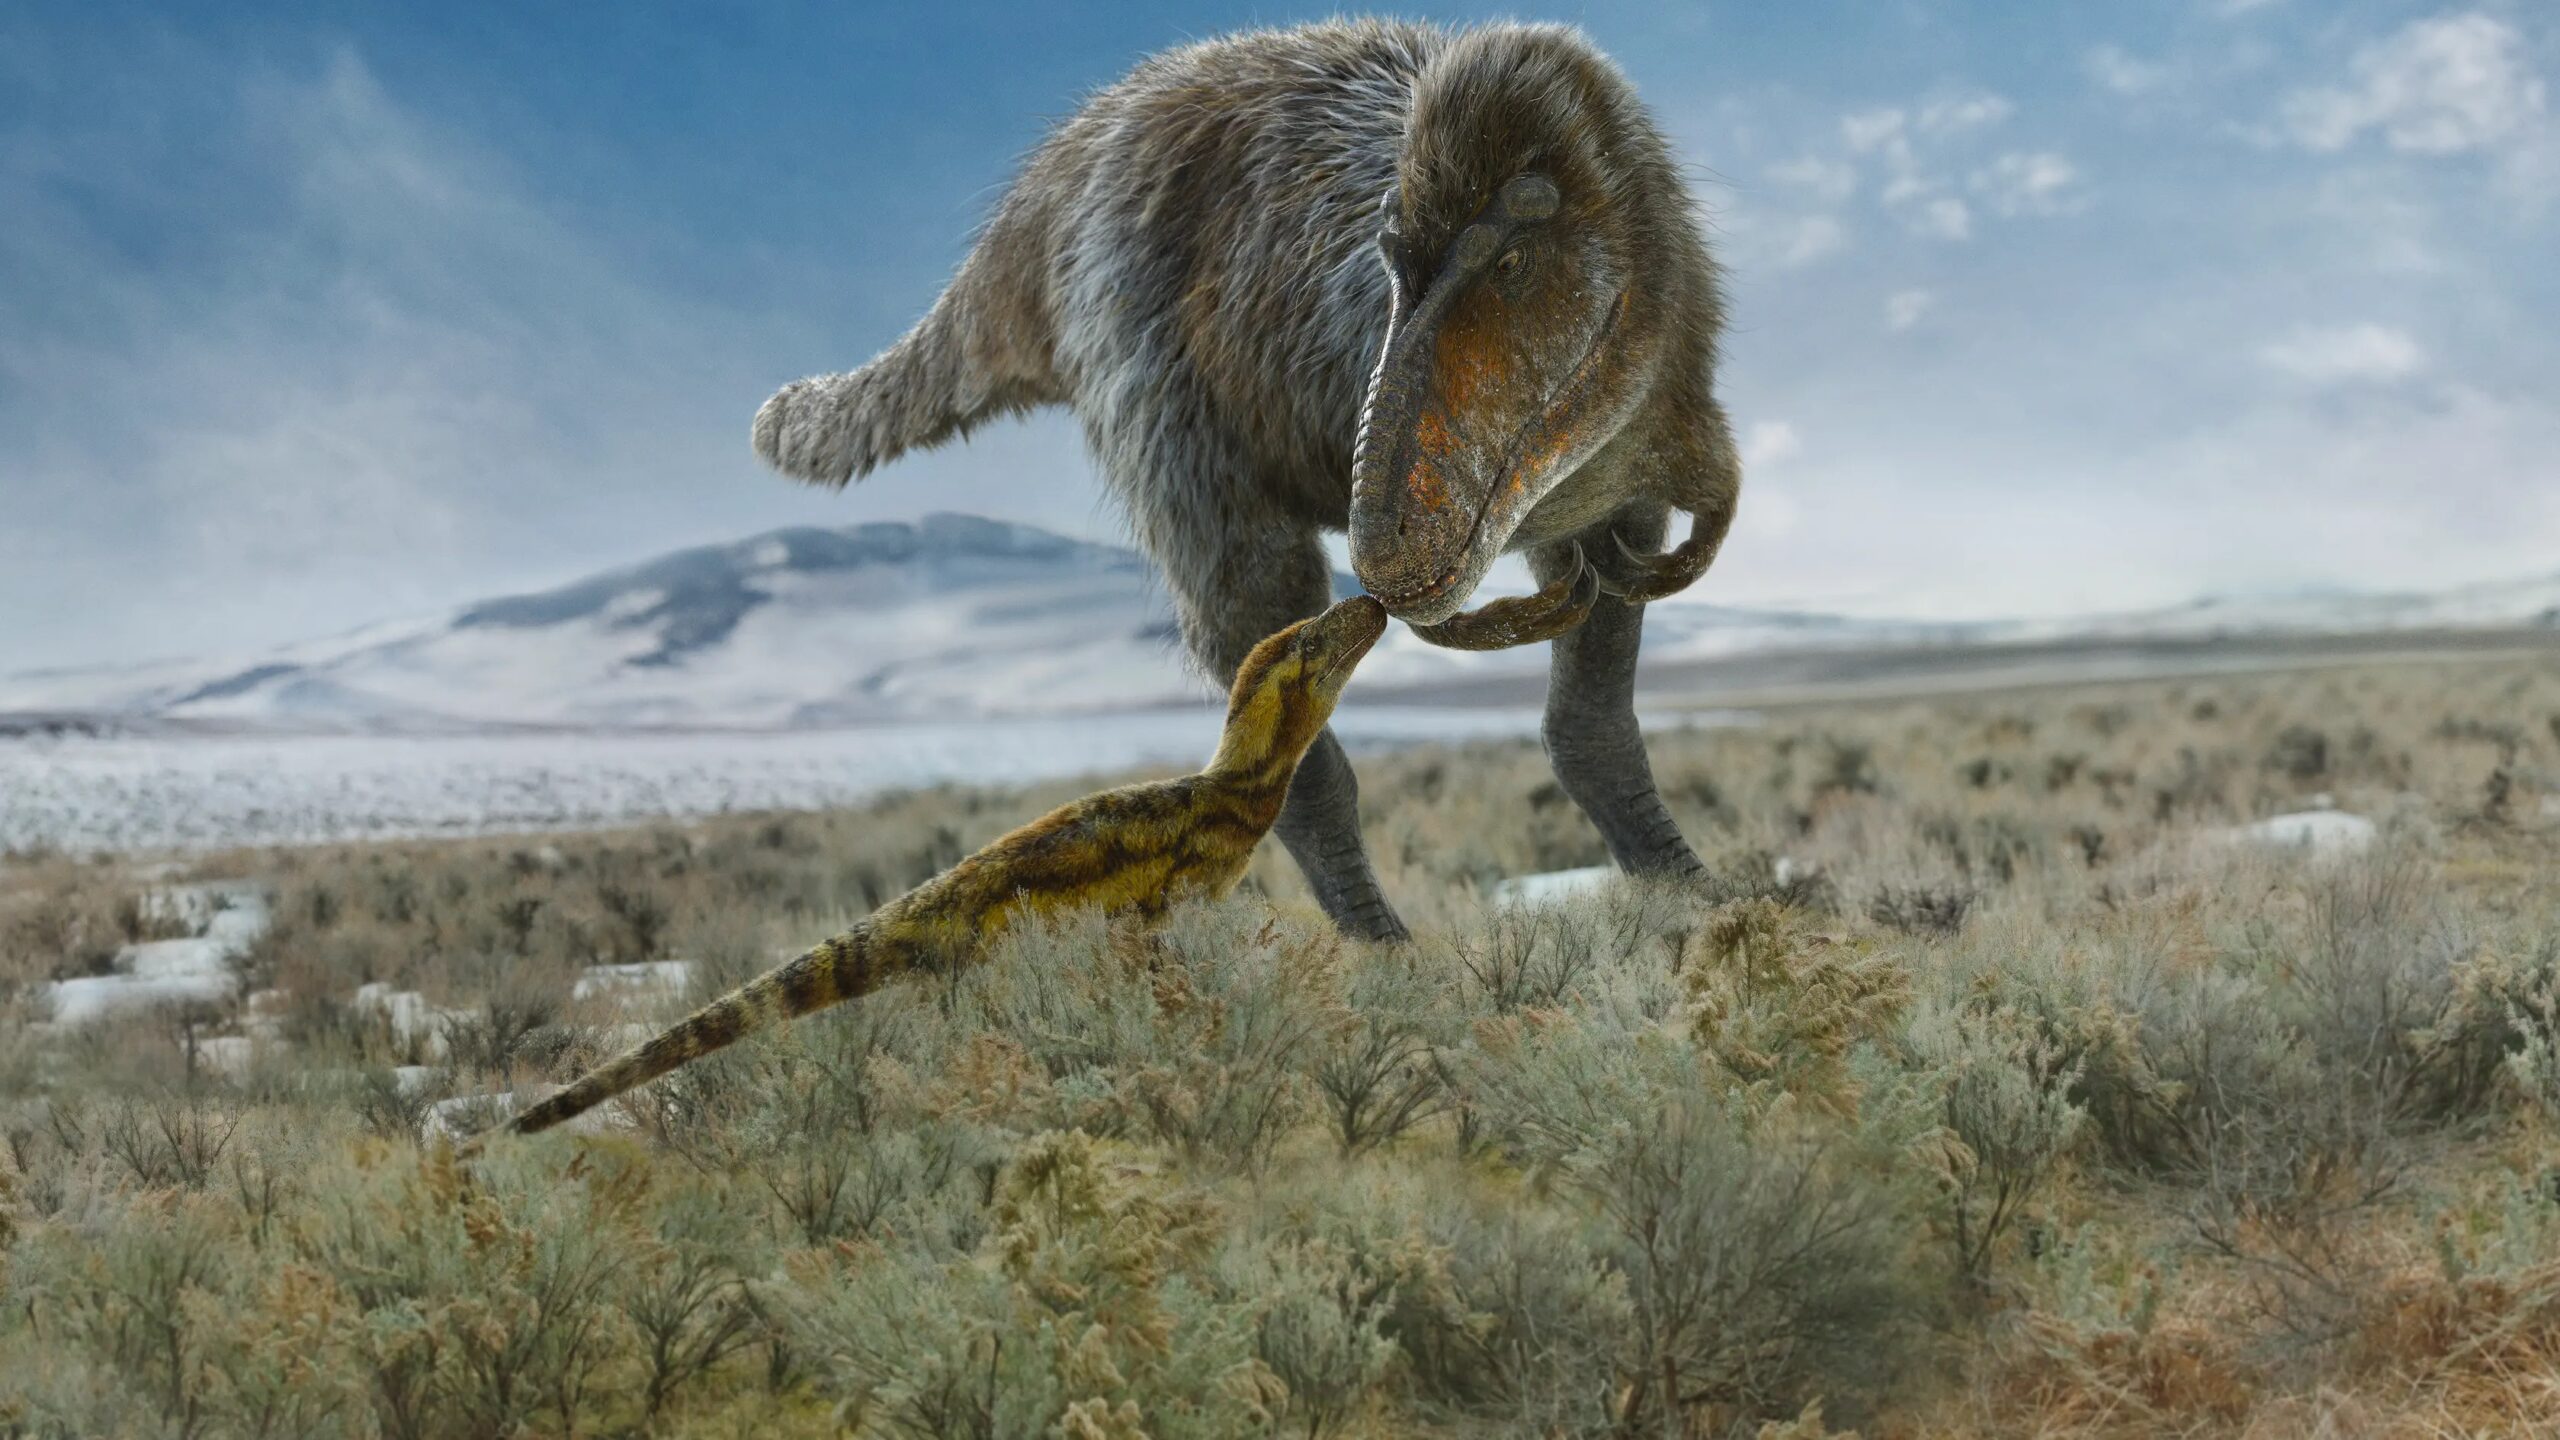 Prehistoric Planet, Redefining Dinosaurs: Exploring the Spectacular David Attenborough Series Beyond Jurassic Park